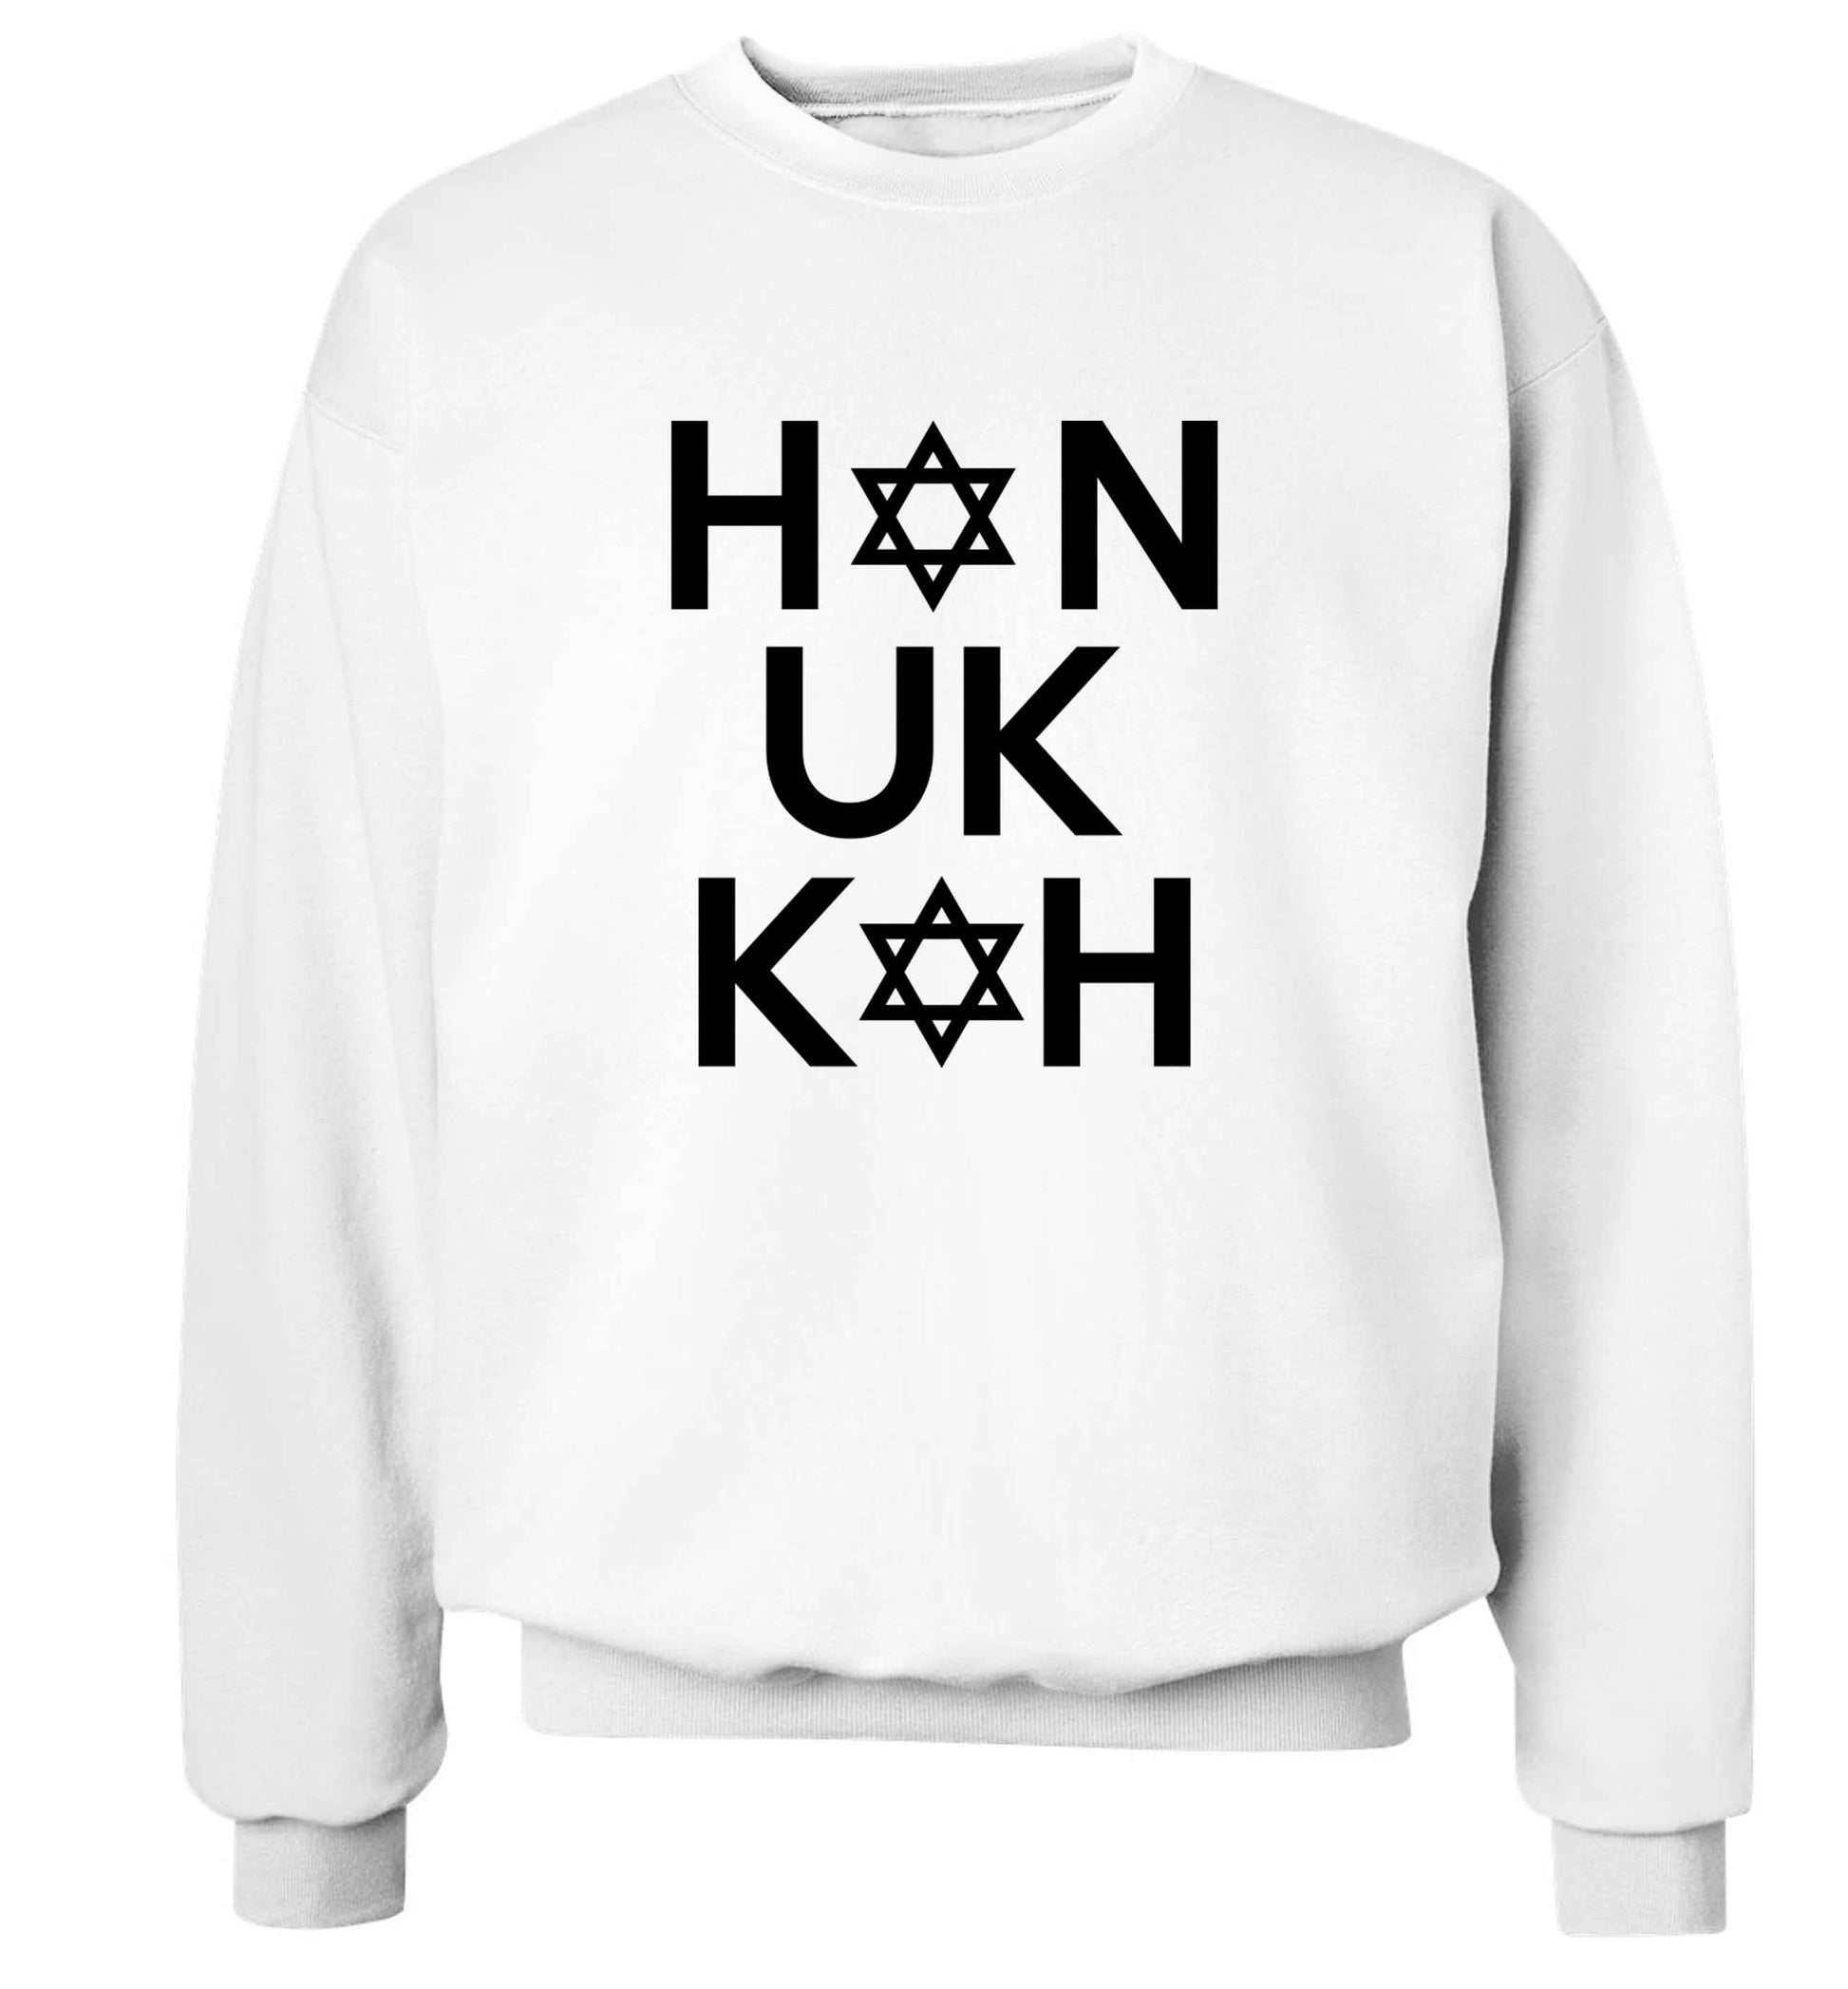 Han uk kah  Hanukkah star of david adult's unisex white sweater 2XL